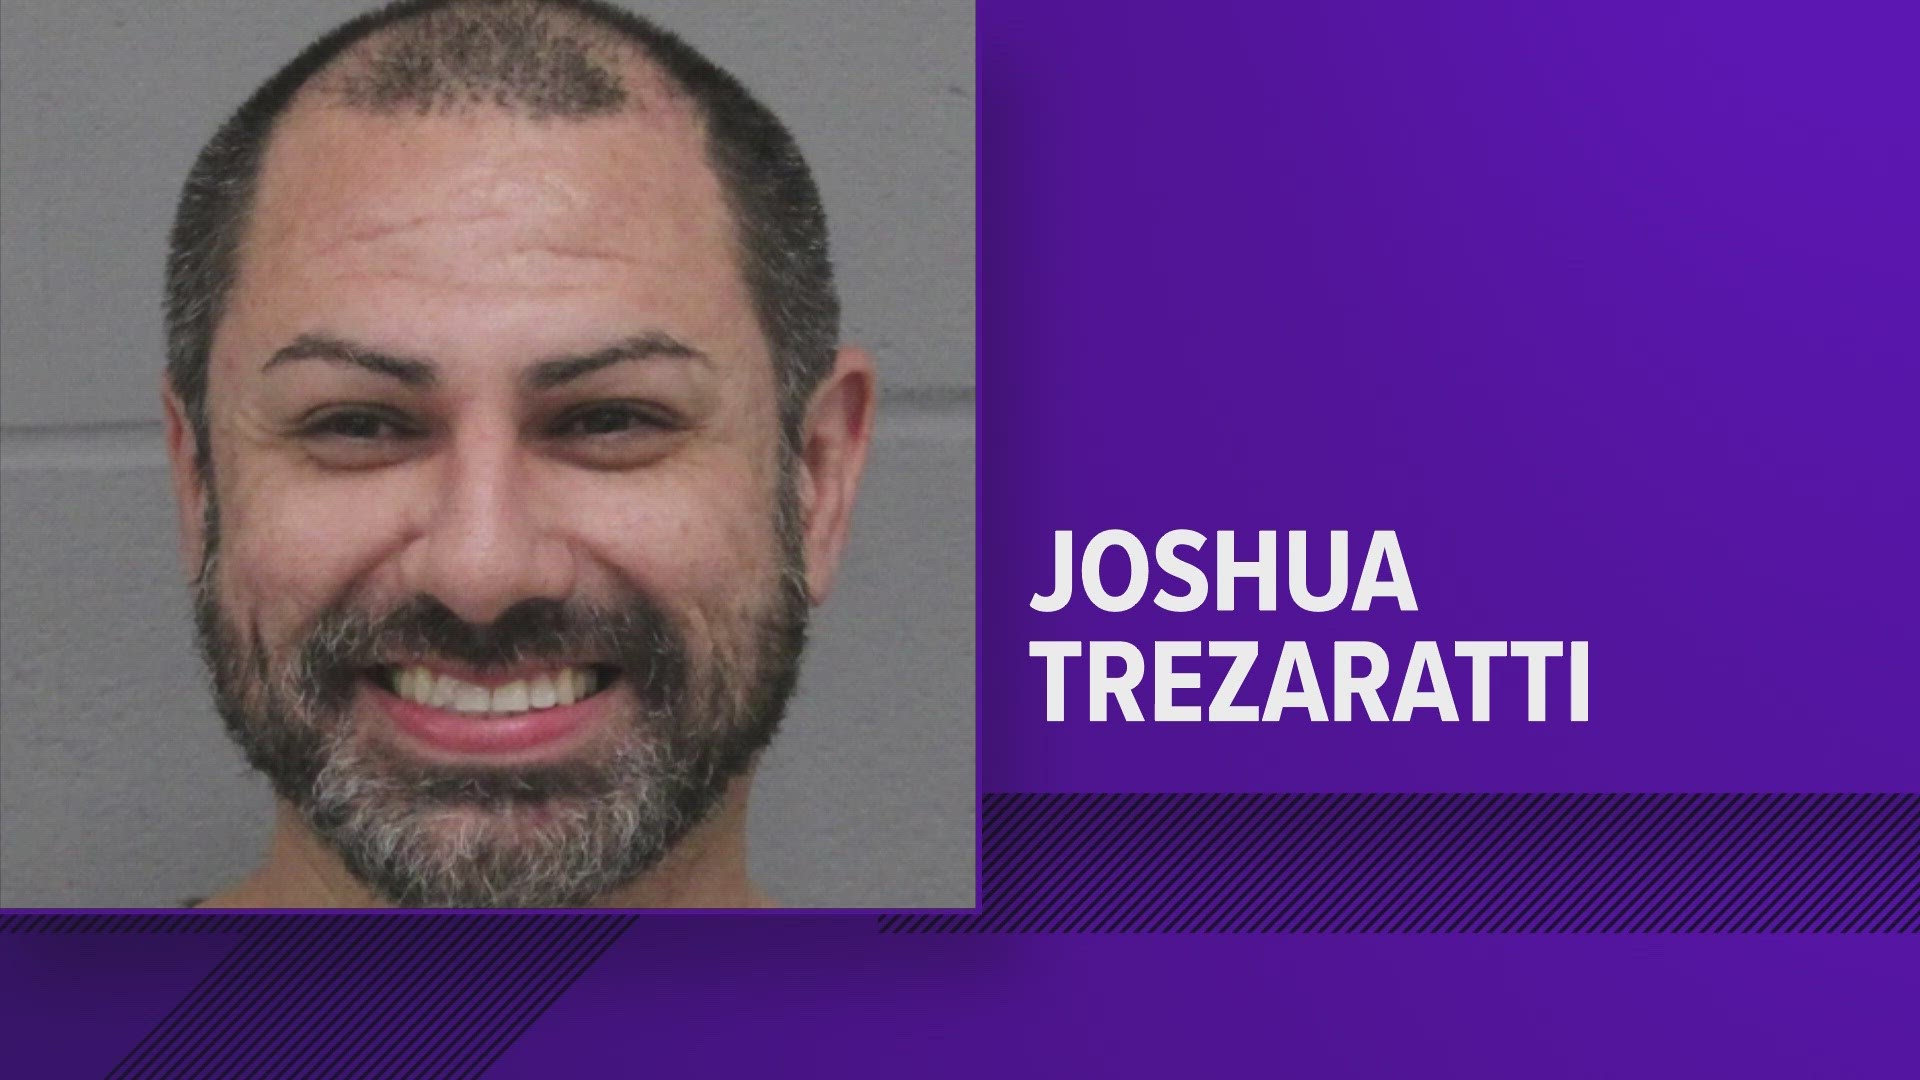 According to an affidavit, Joshua Trezaratti allegedly shot Joshua Rivera after he said Rivera touched his wife inappropriately.